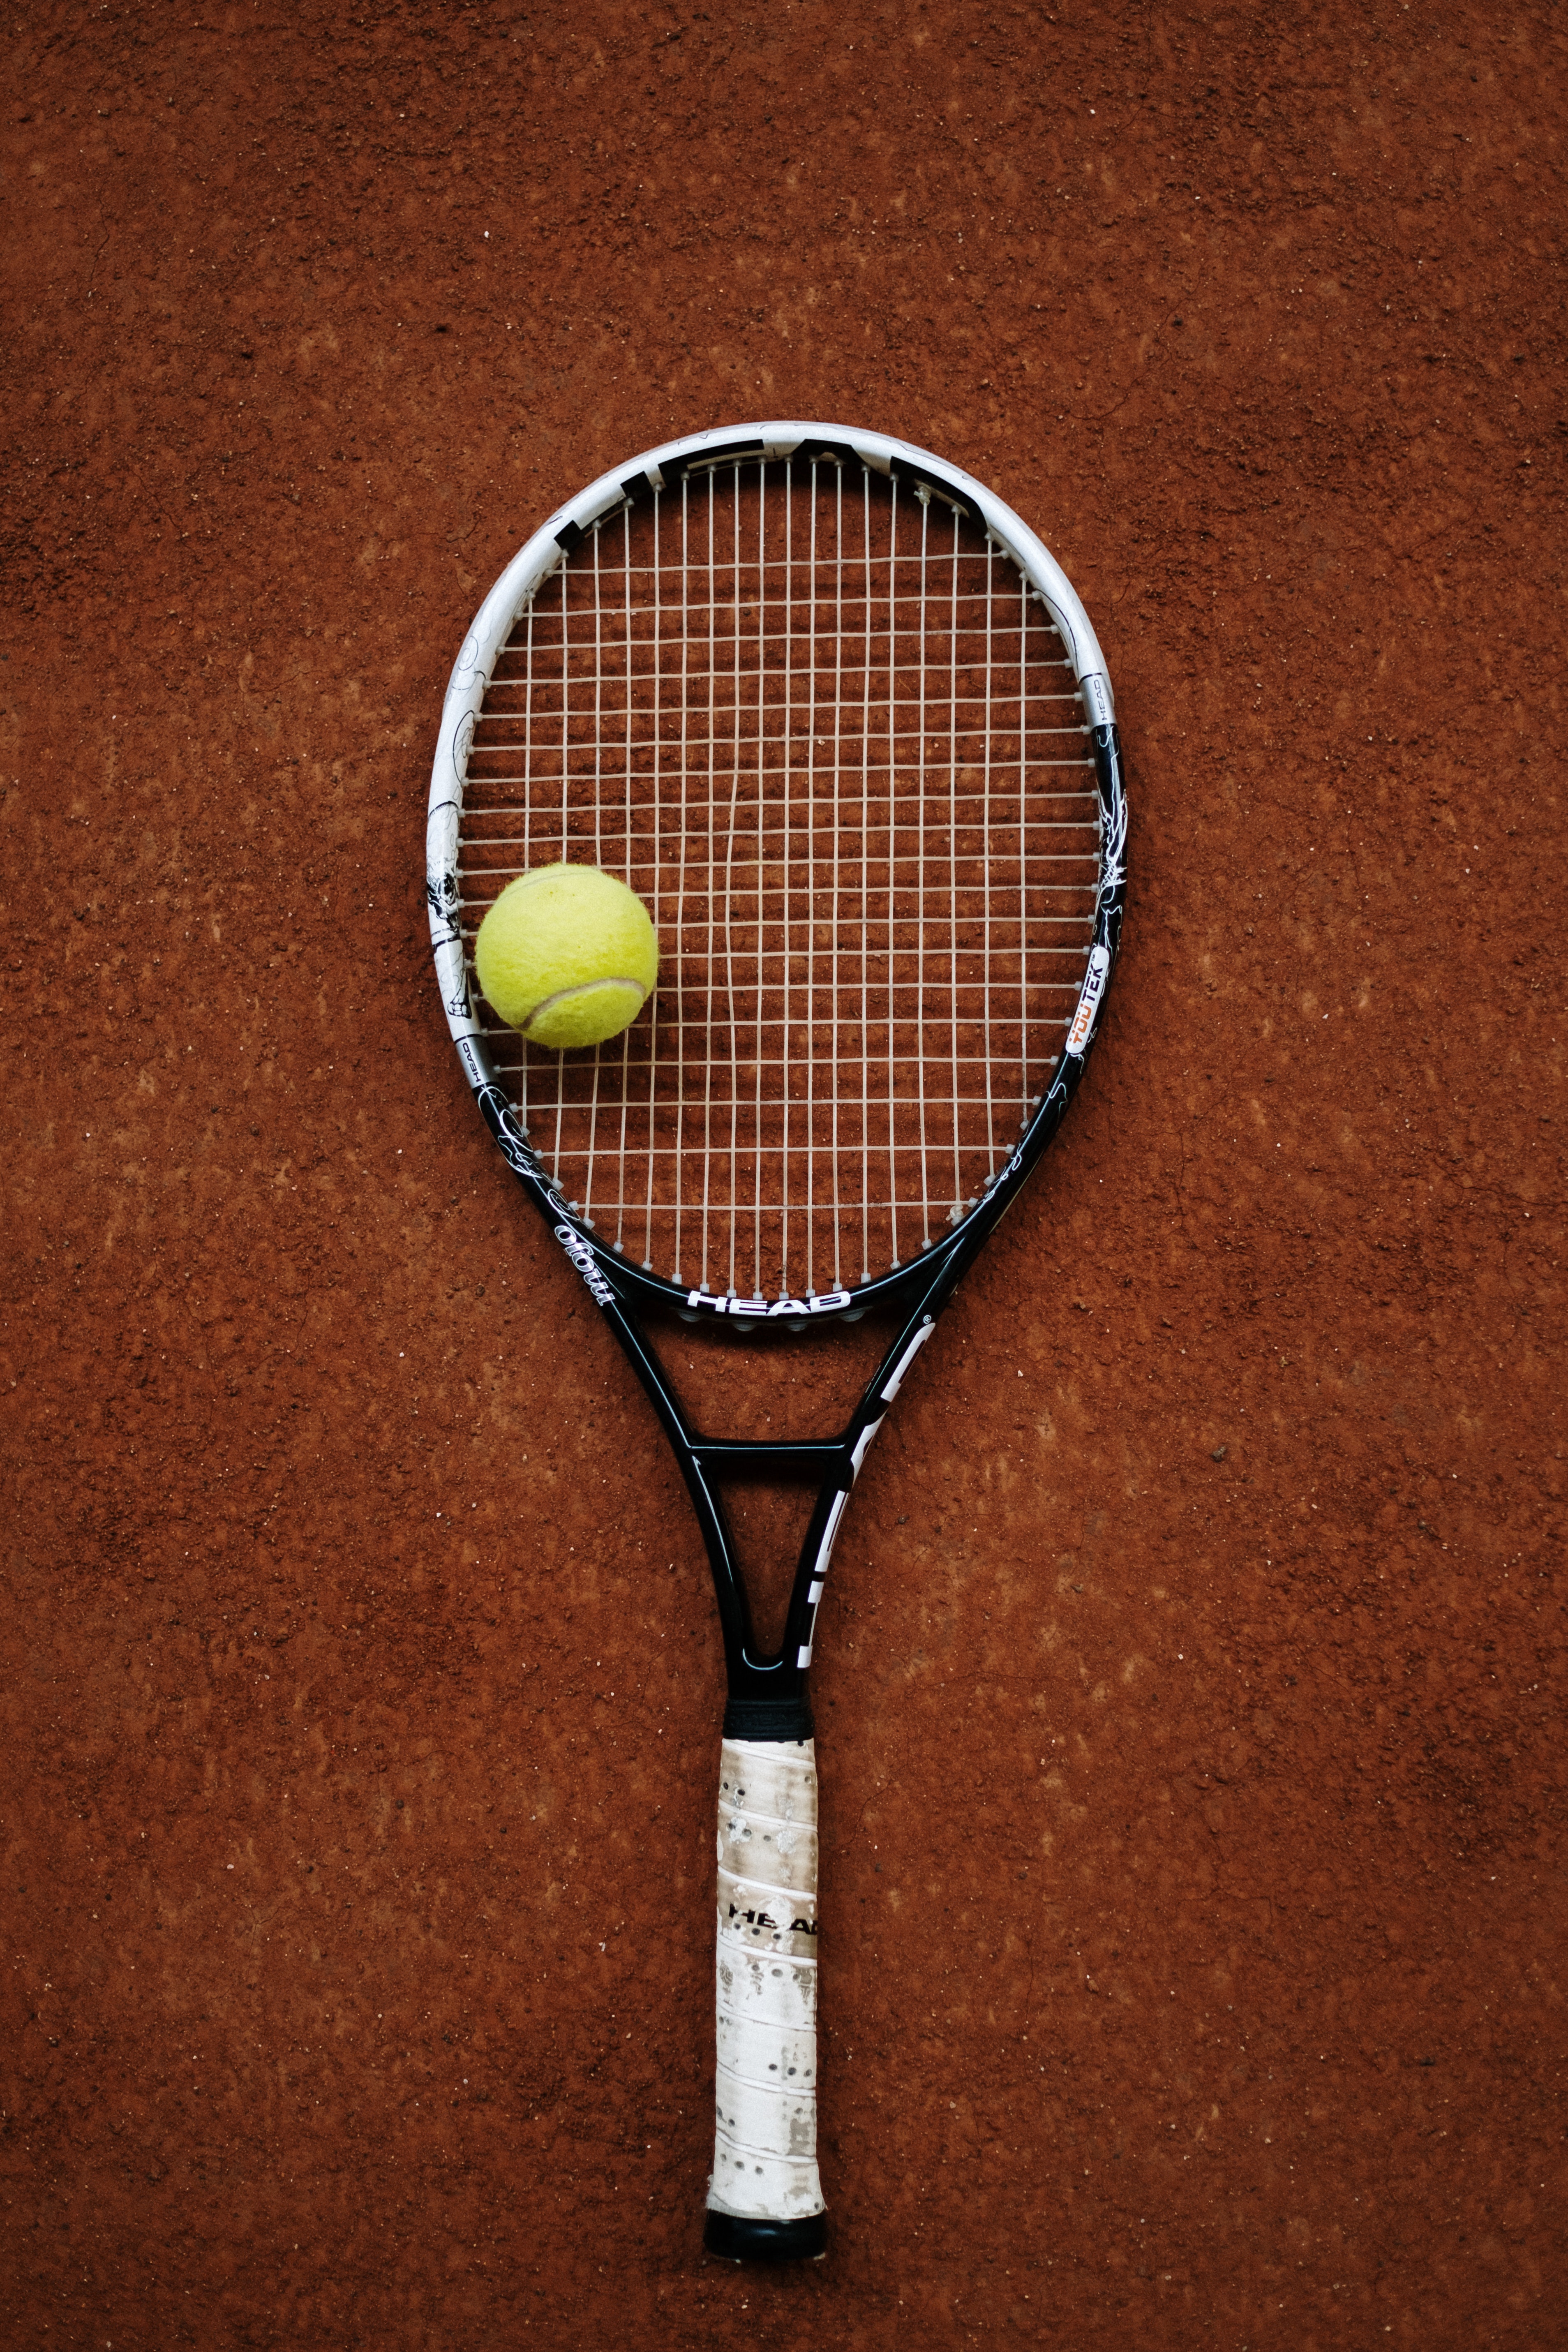 Raqueta y pelota de tenis sobre pista de tenis.